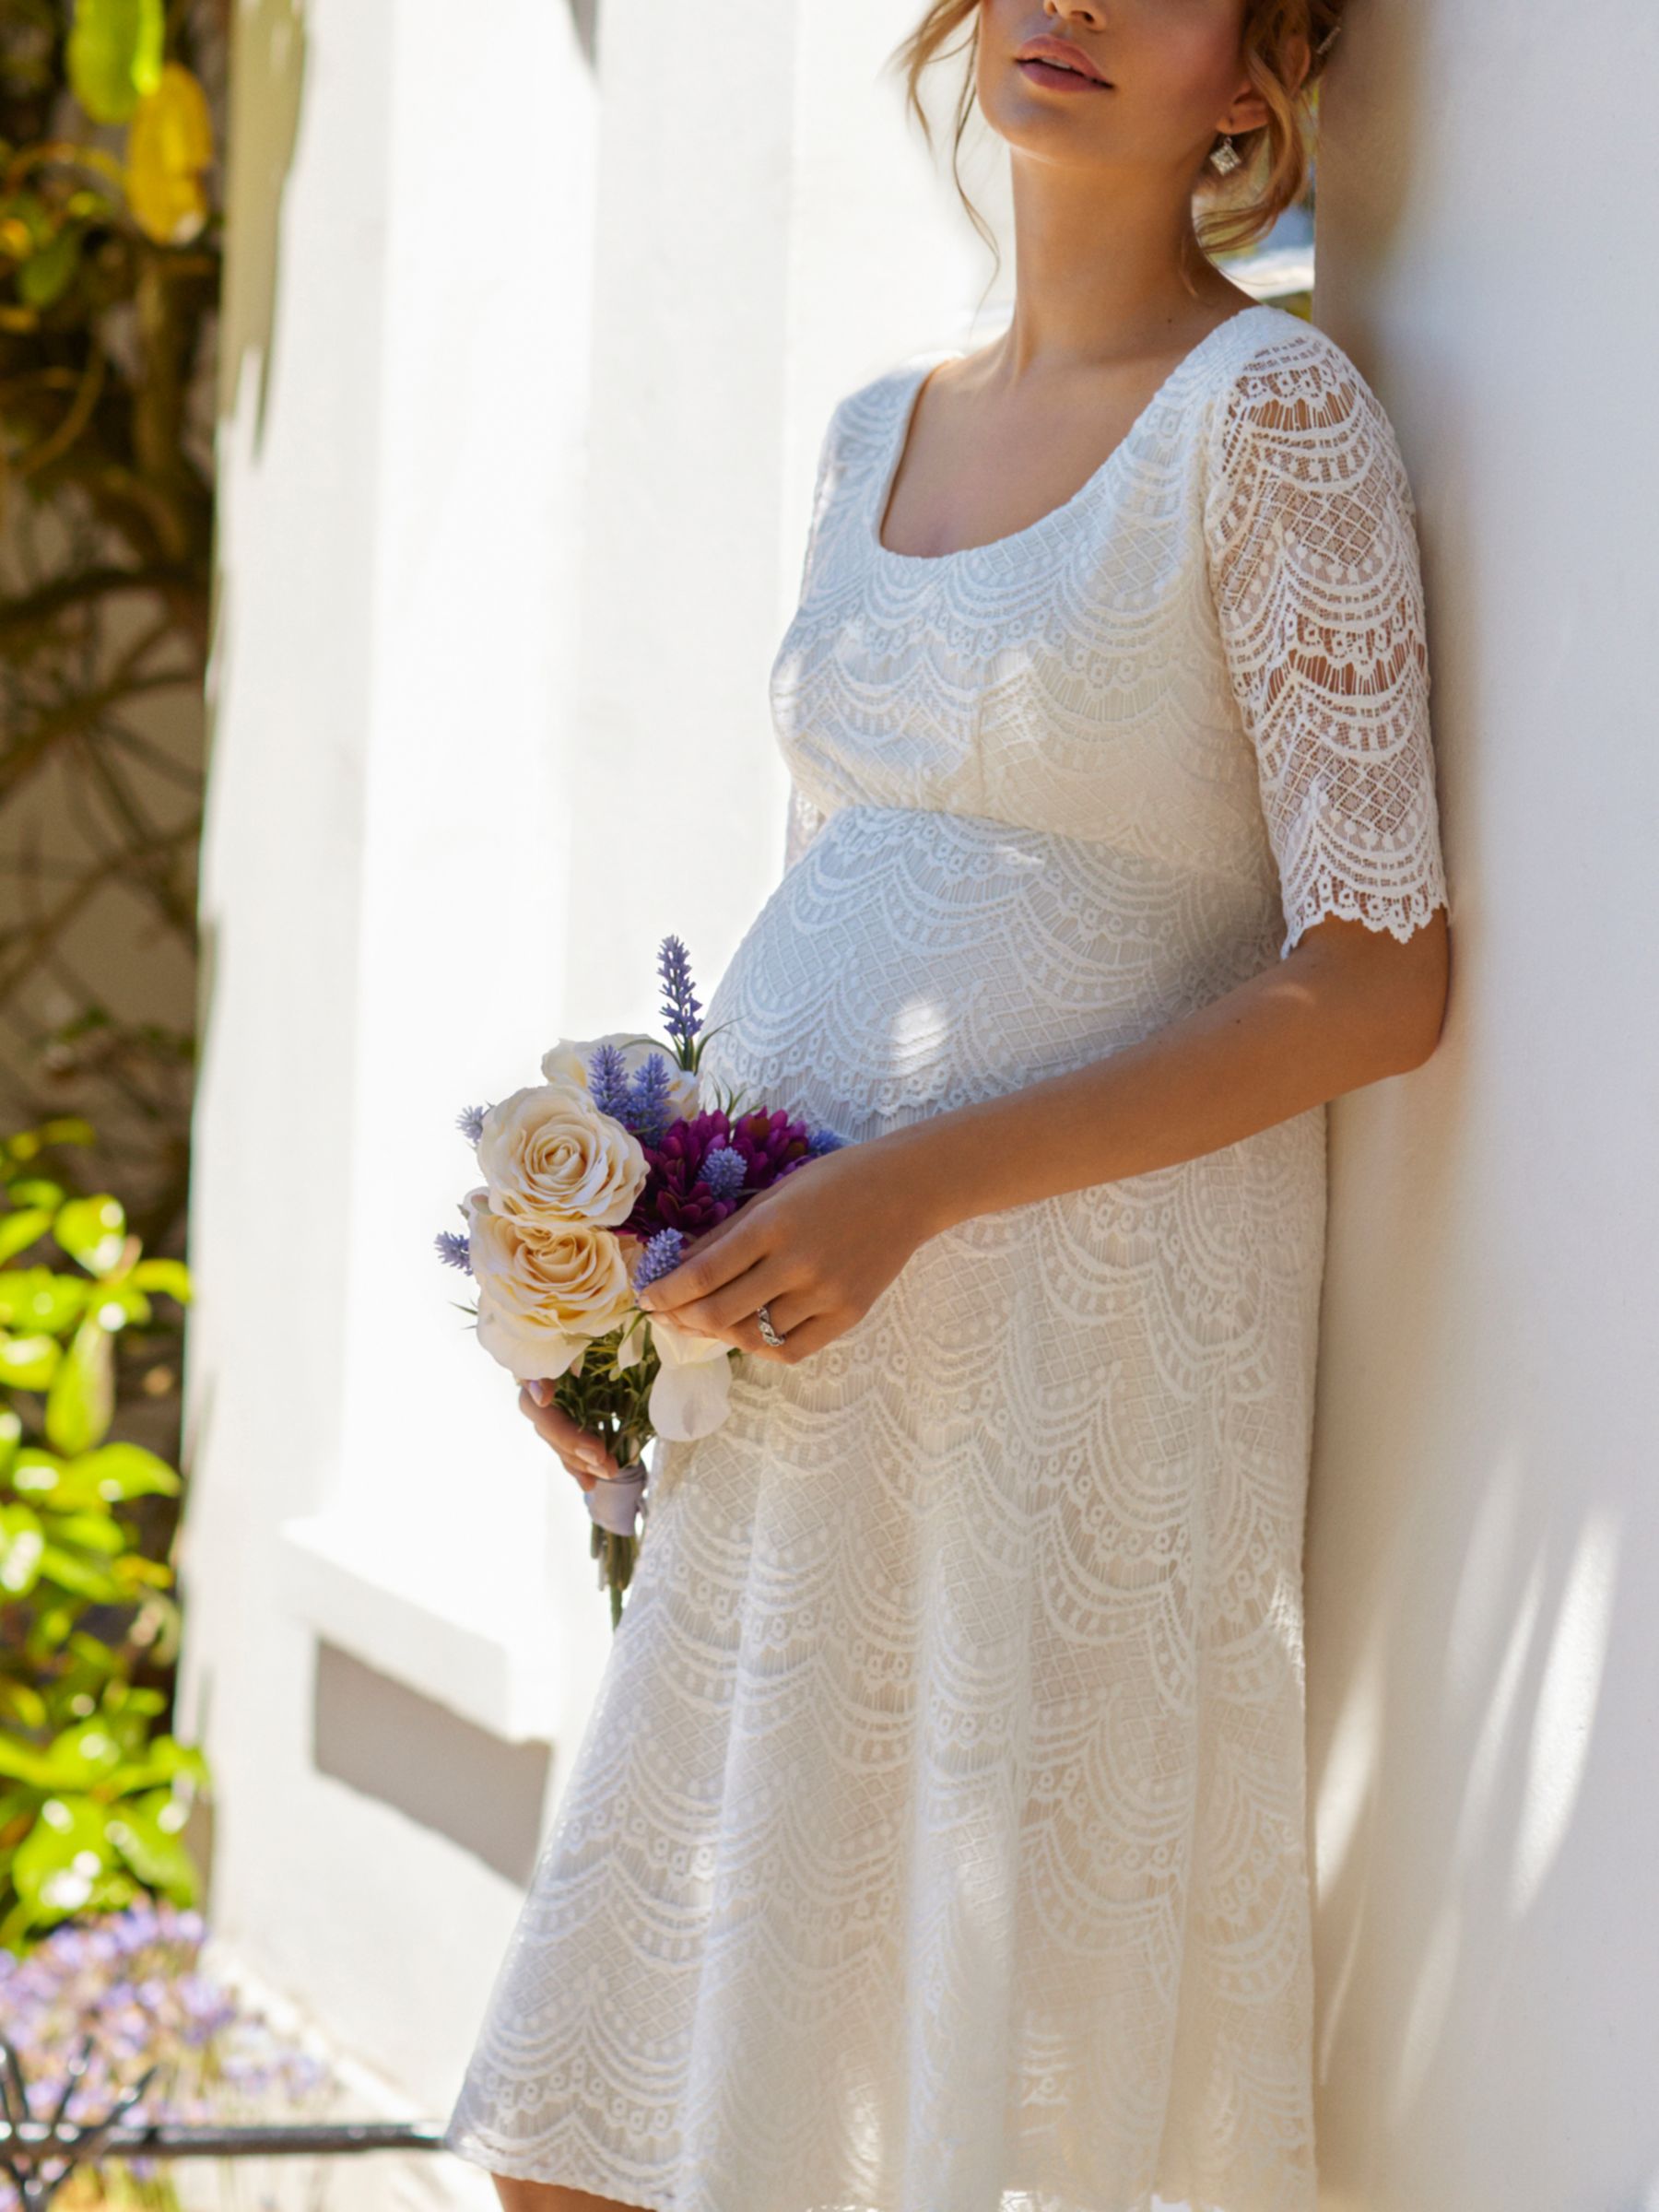 Tiffany Rose Verona Maternity Lace Short Wedding Dress, Ivory, 6-8